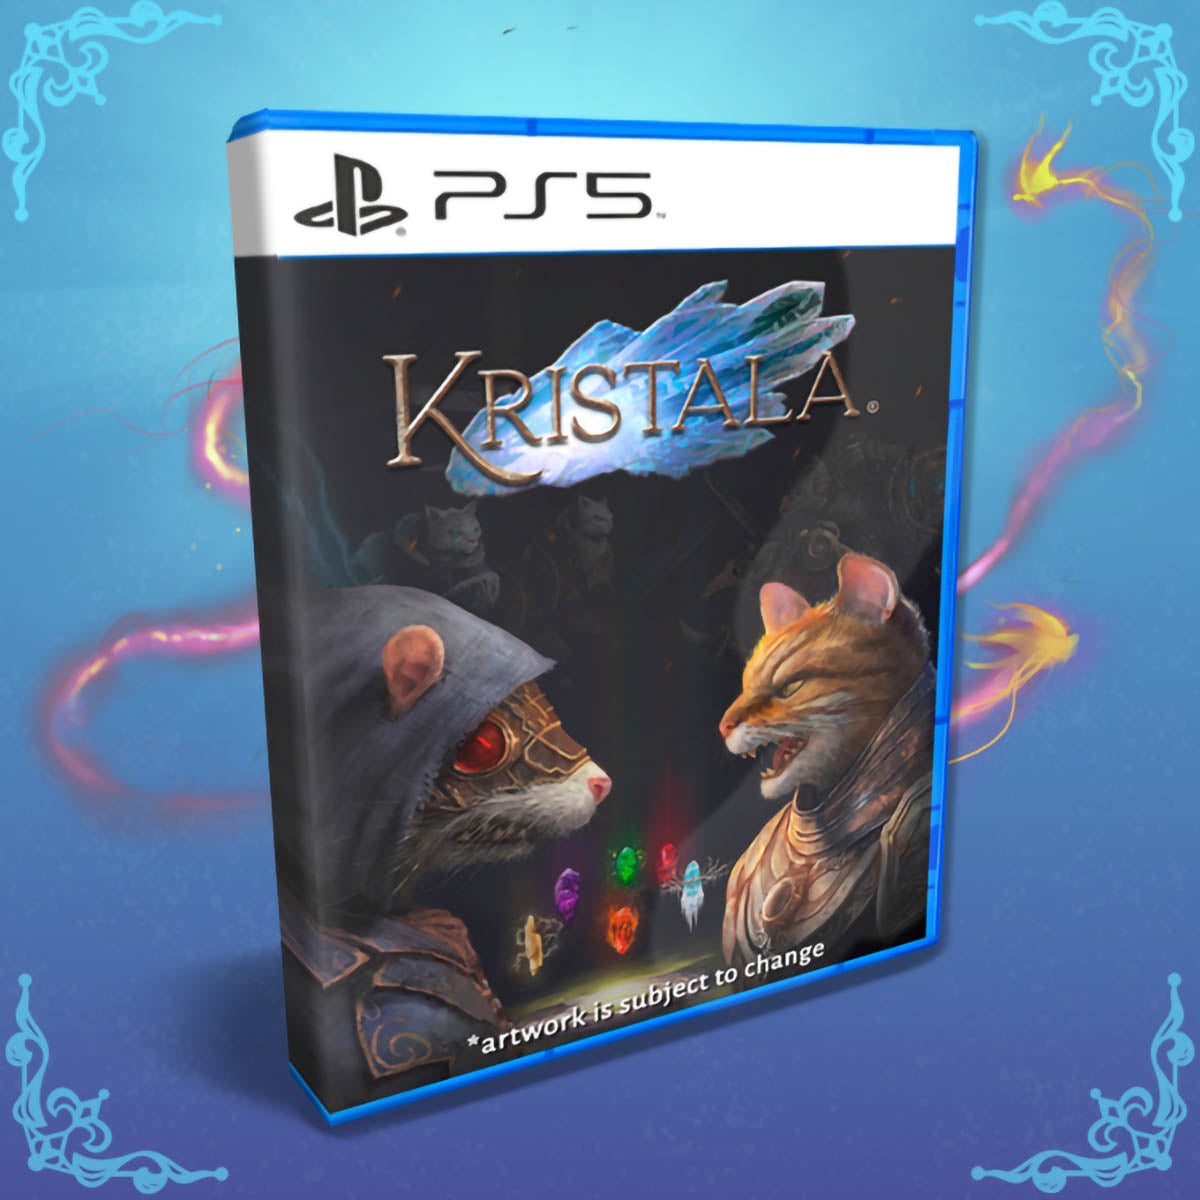 Example Kickstarter Ad Image for Kristala that raised $150,000